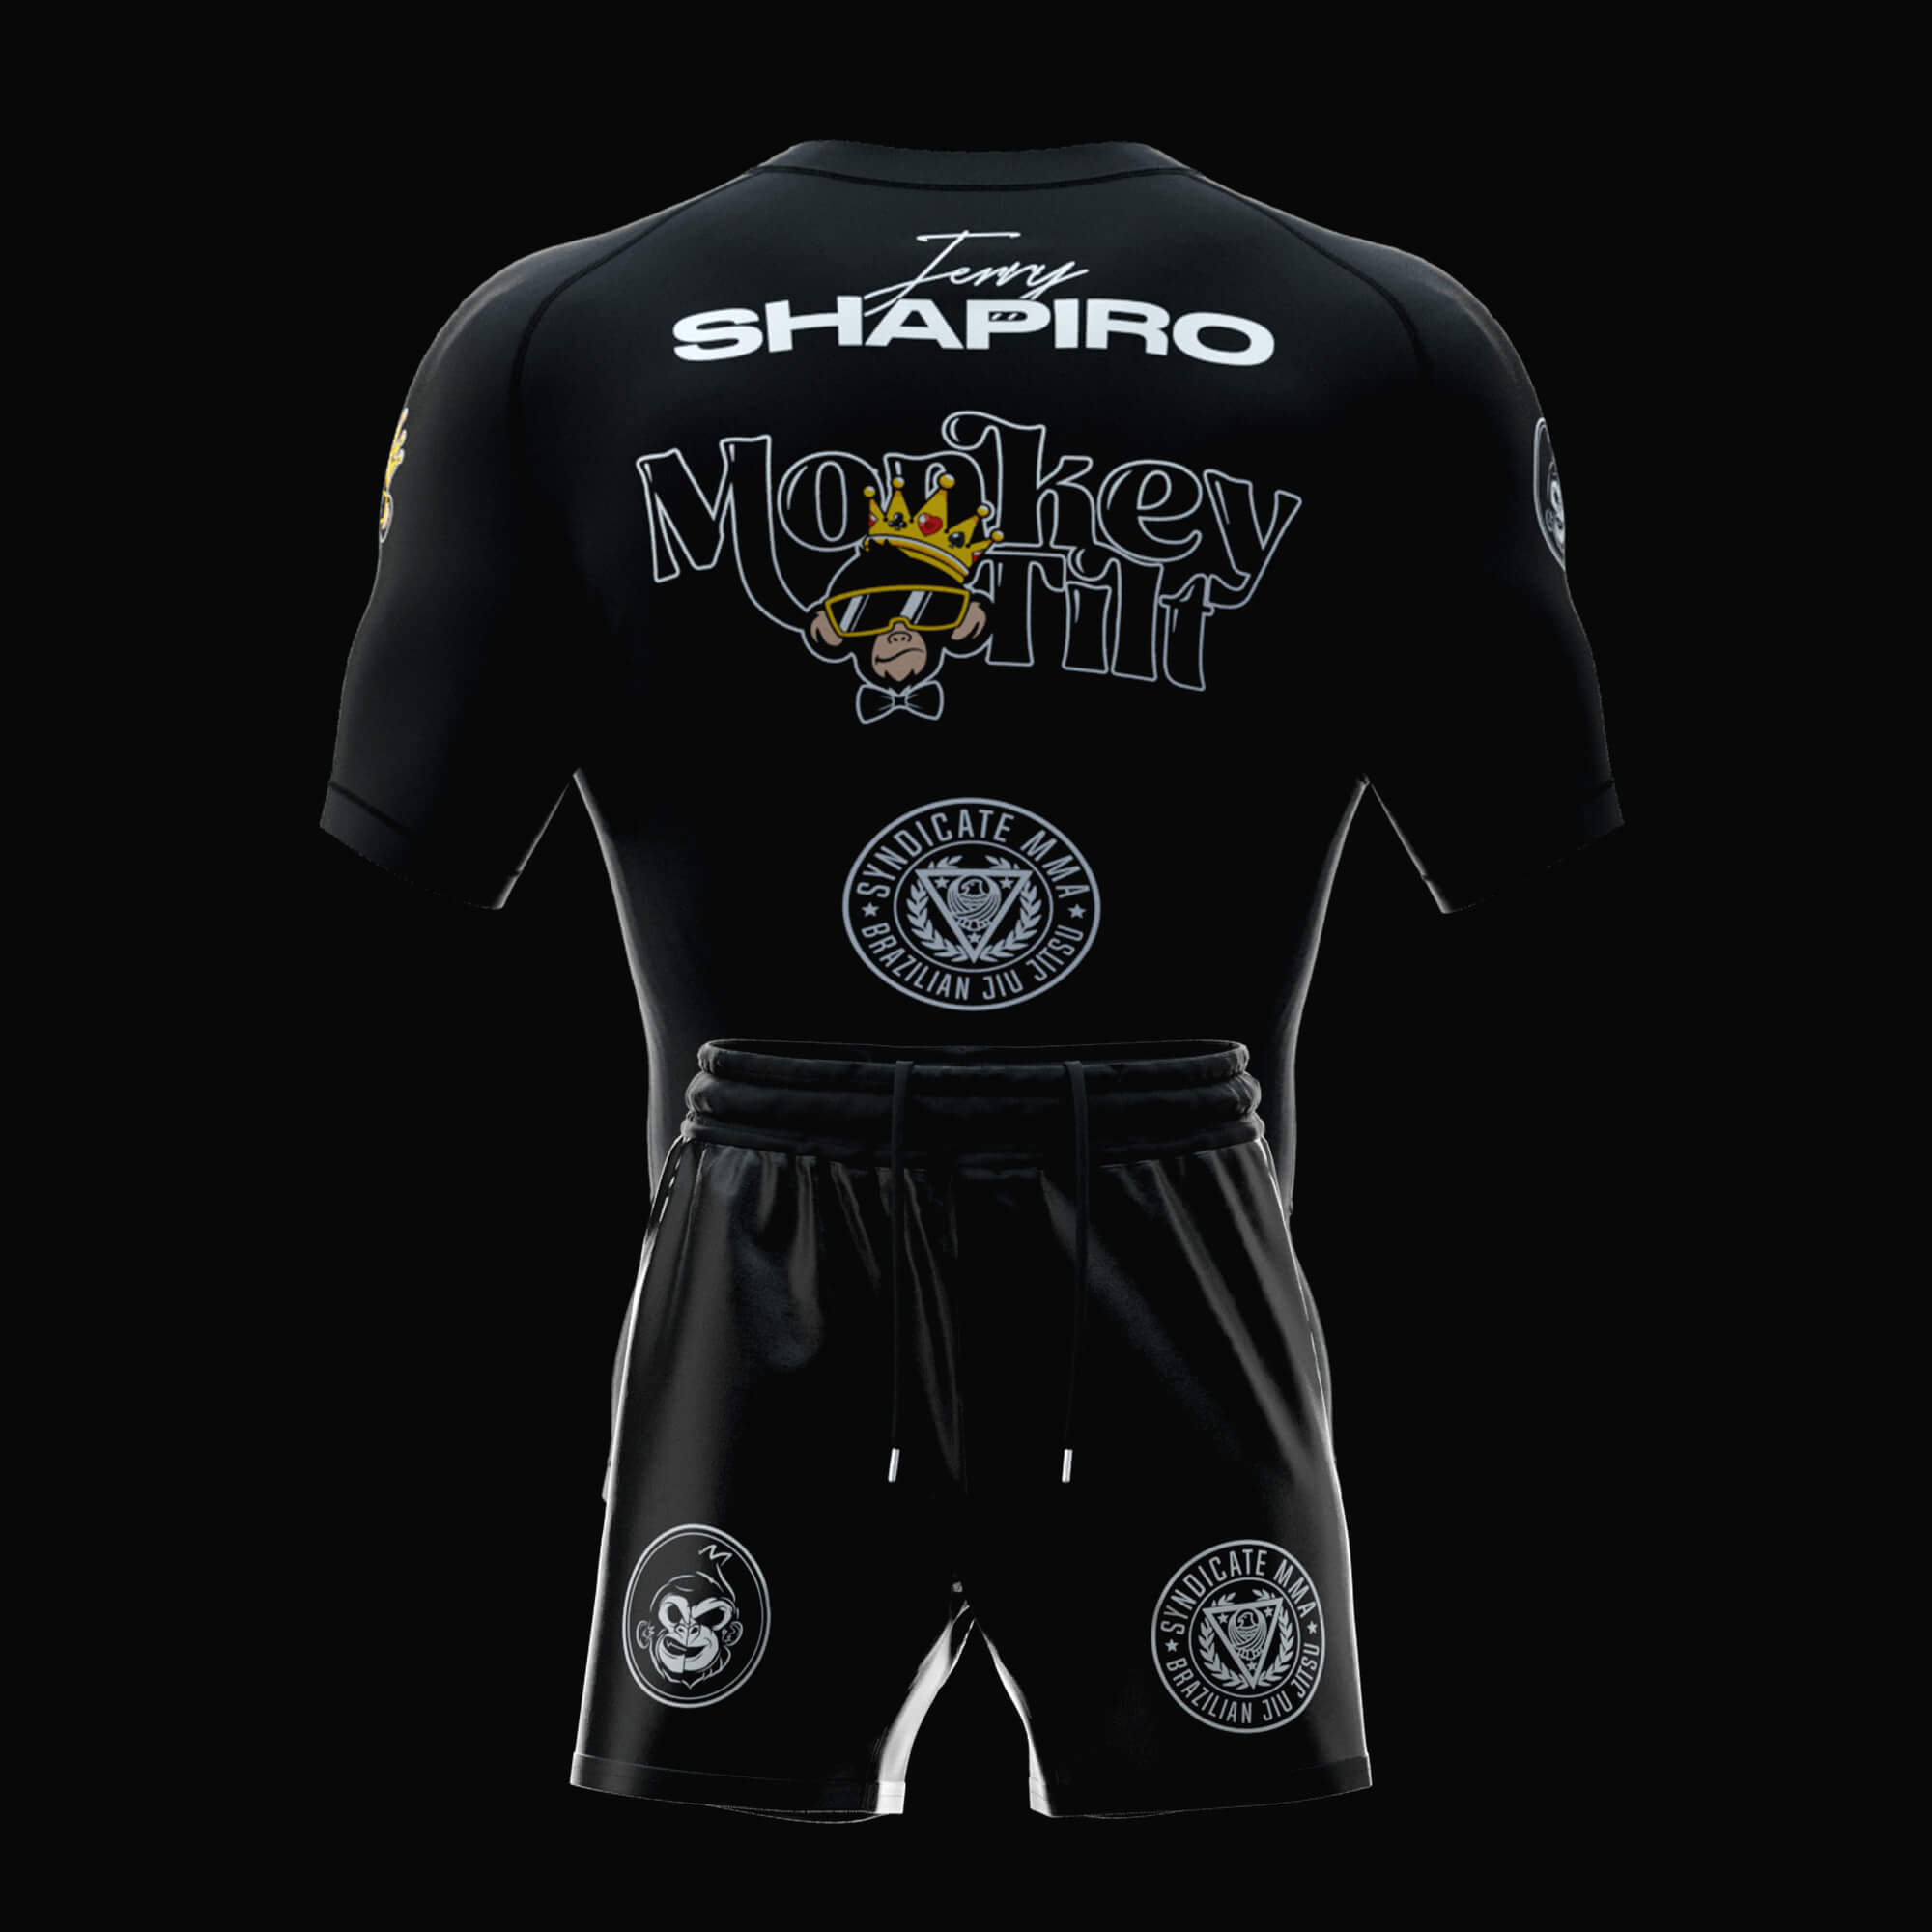 Custom BJJ Jiu Jitsu Rashguard and Grappling Fight Shorts Mockup Design for Jerry Shapiro by Eagr Ones